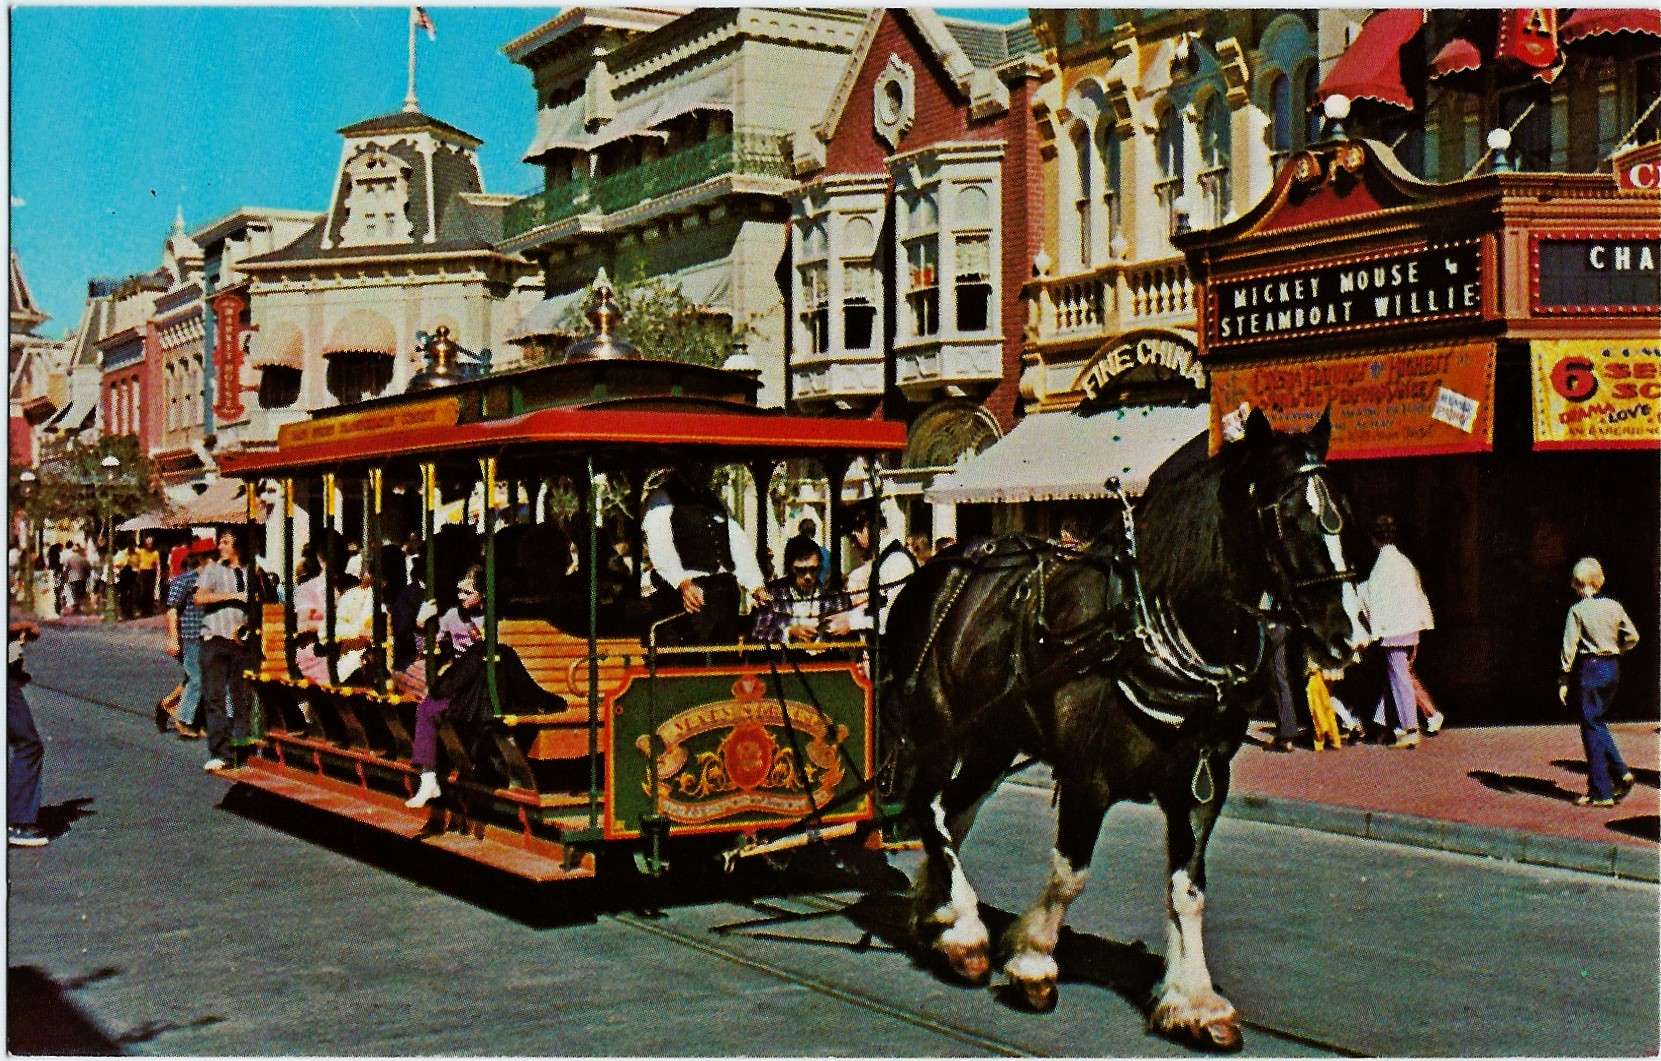 Walt Disney World Reliving the "Good Old Days" 0111-0360